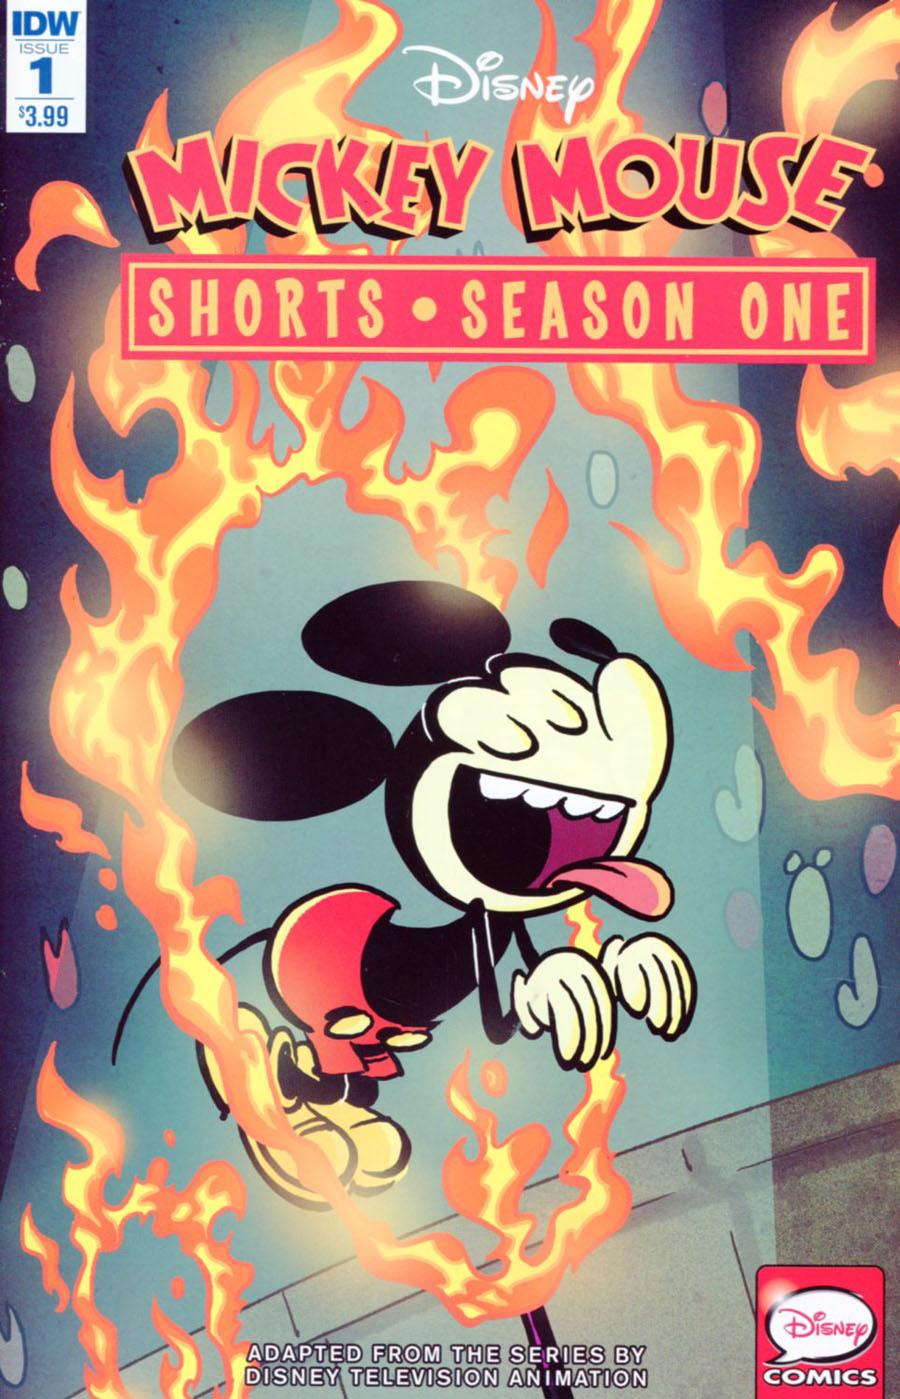 Mickey Mouse Shorts Season 1 Vol. 1 #1